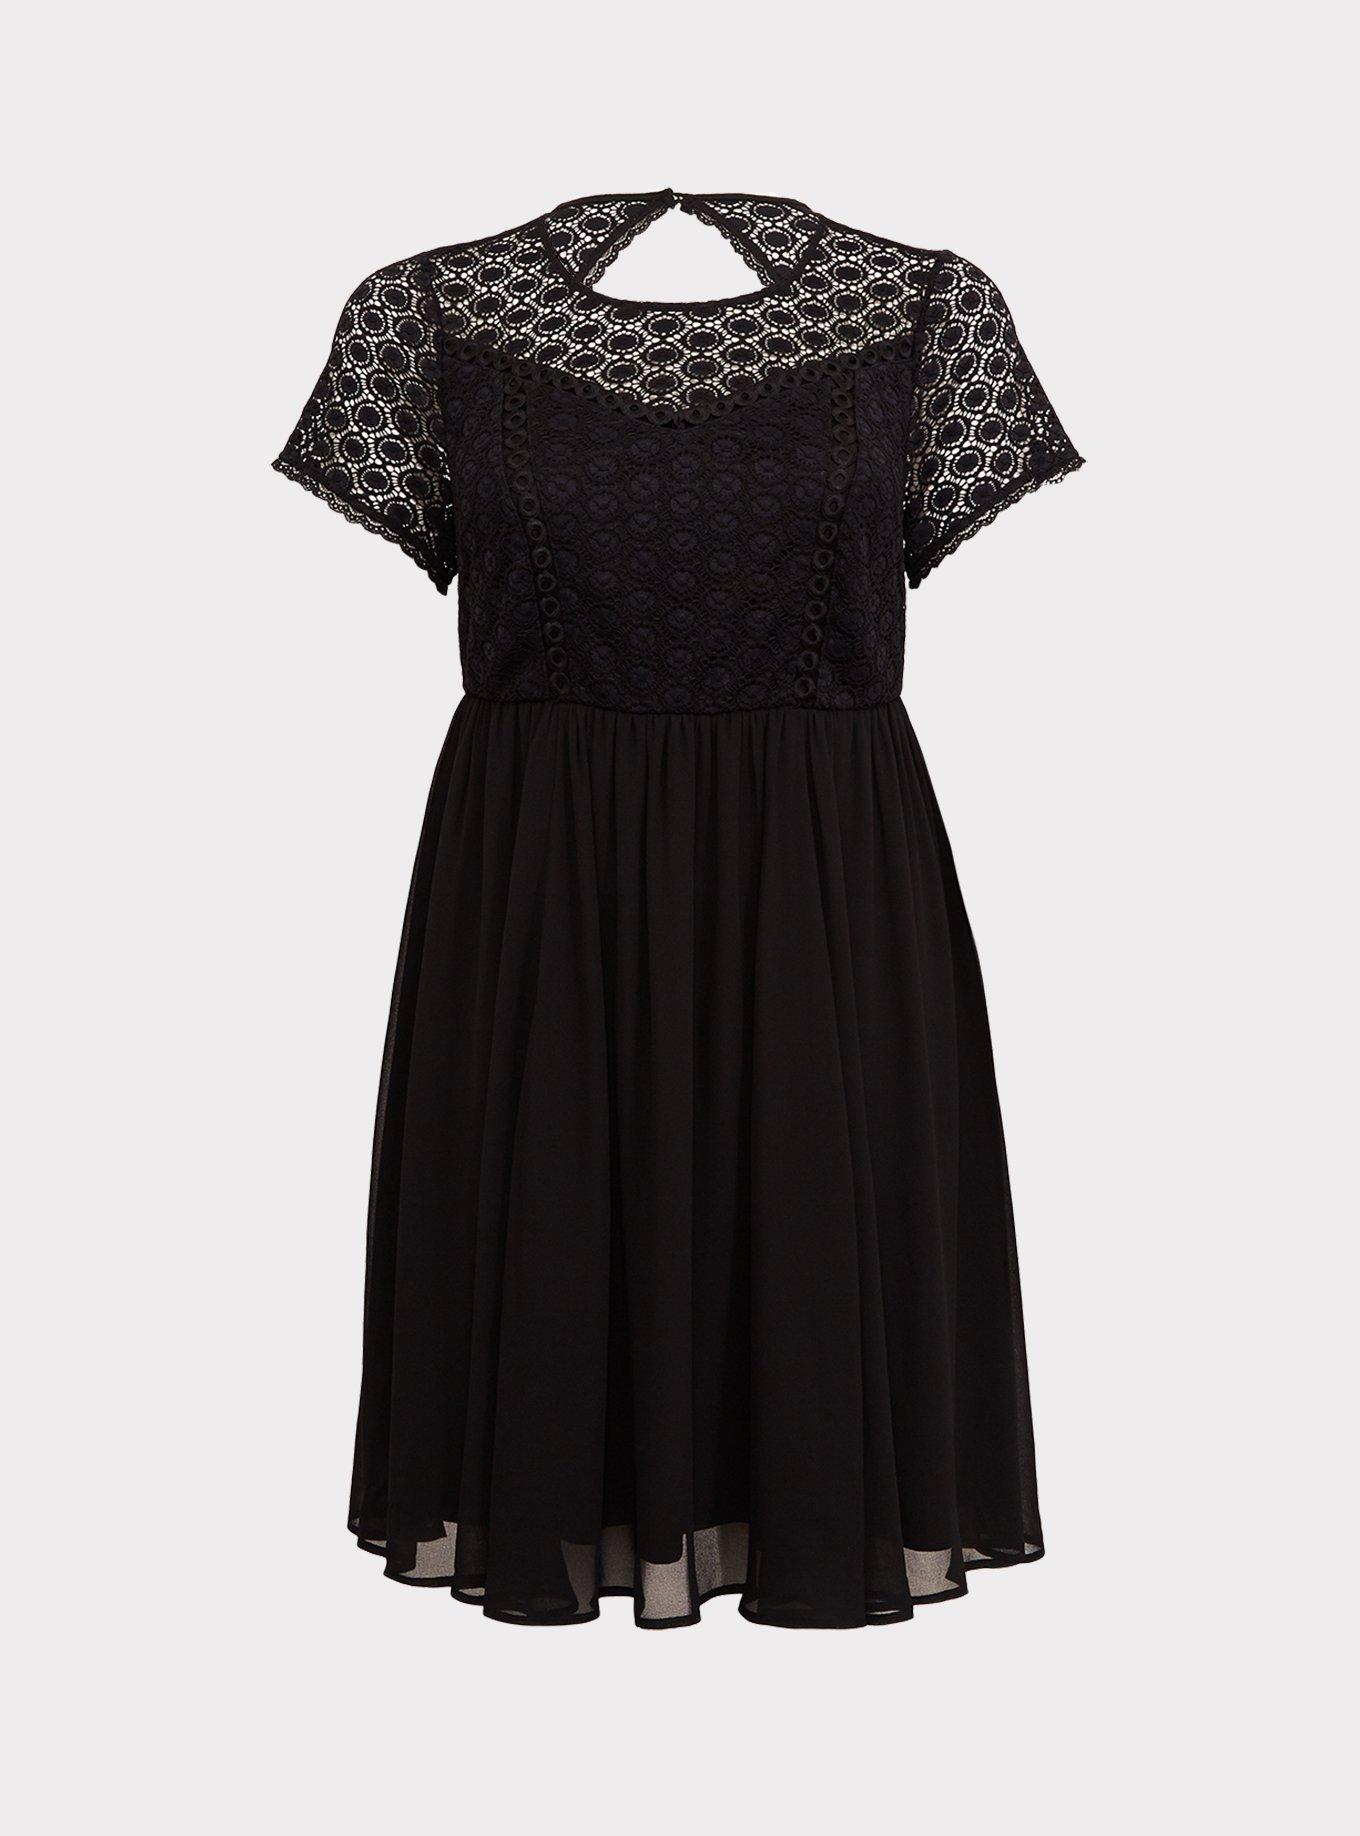 Plus Size - Black Crochet & Chiffon Skater Dress - Torrid